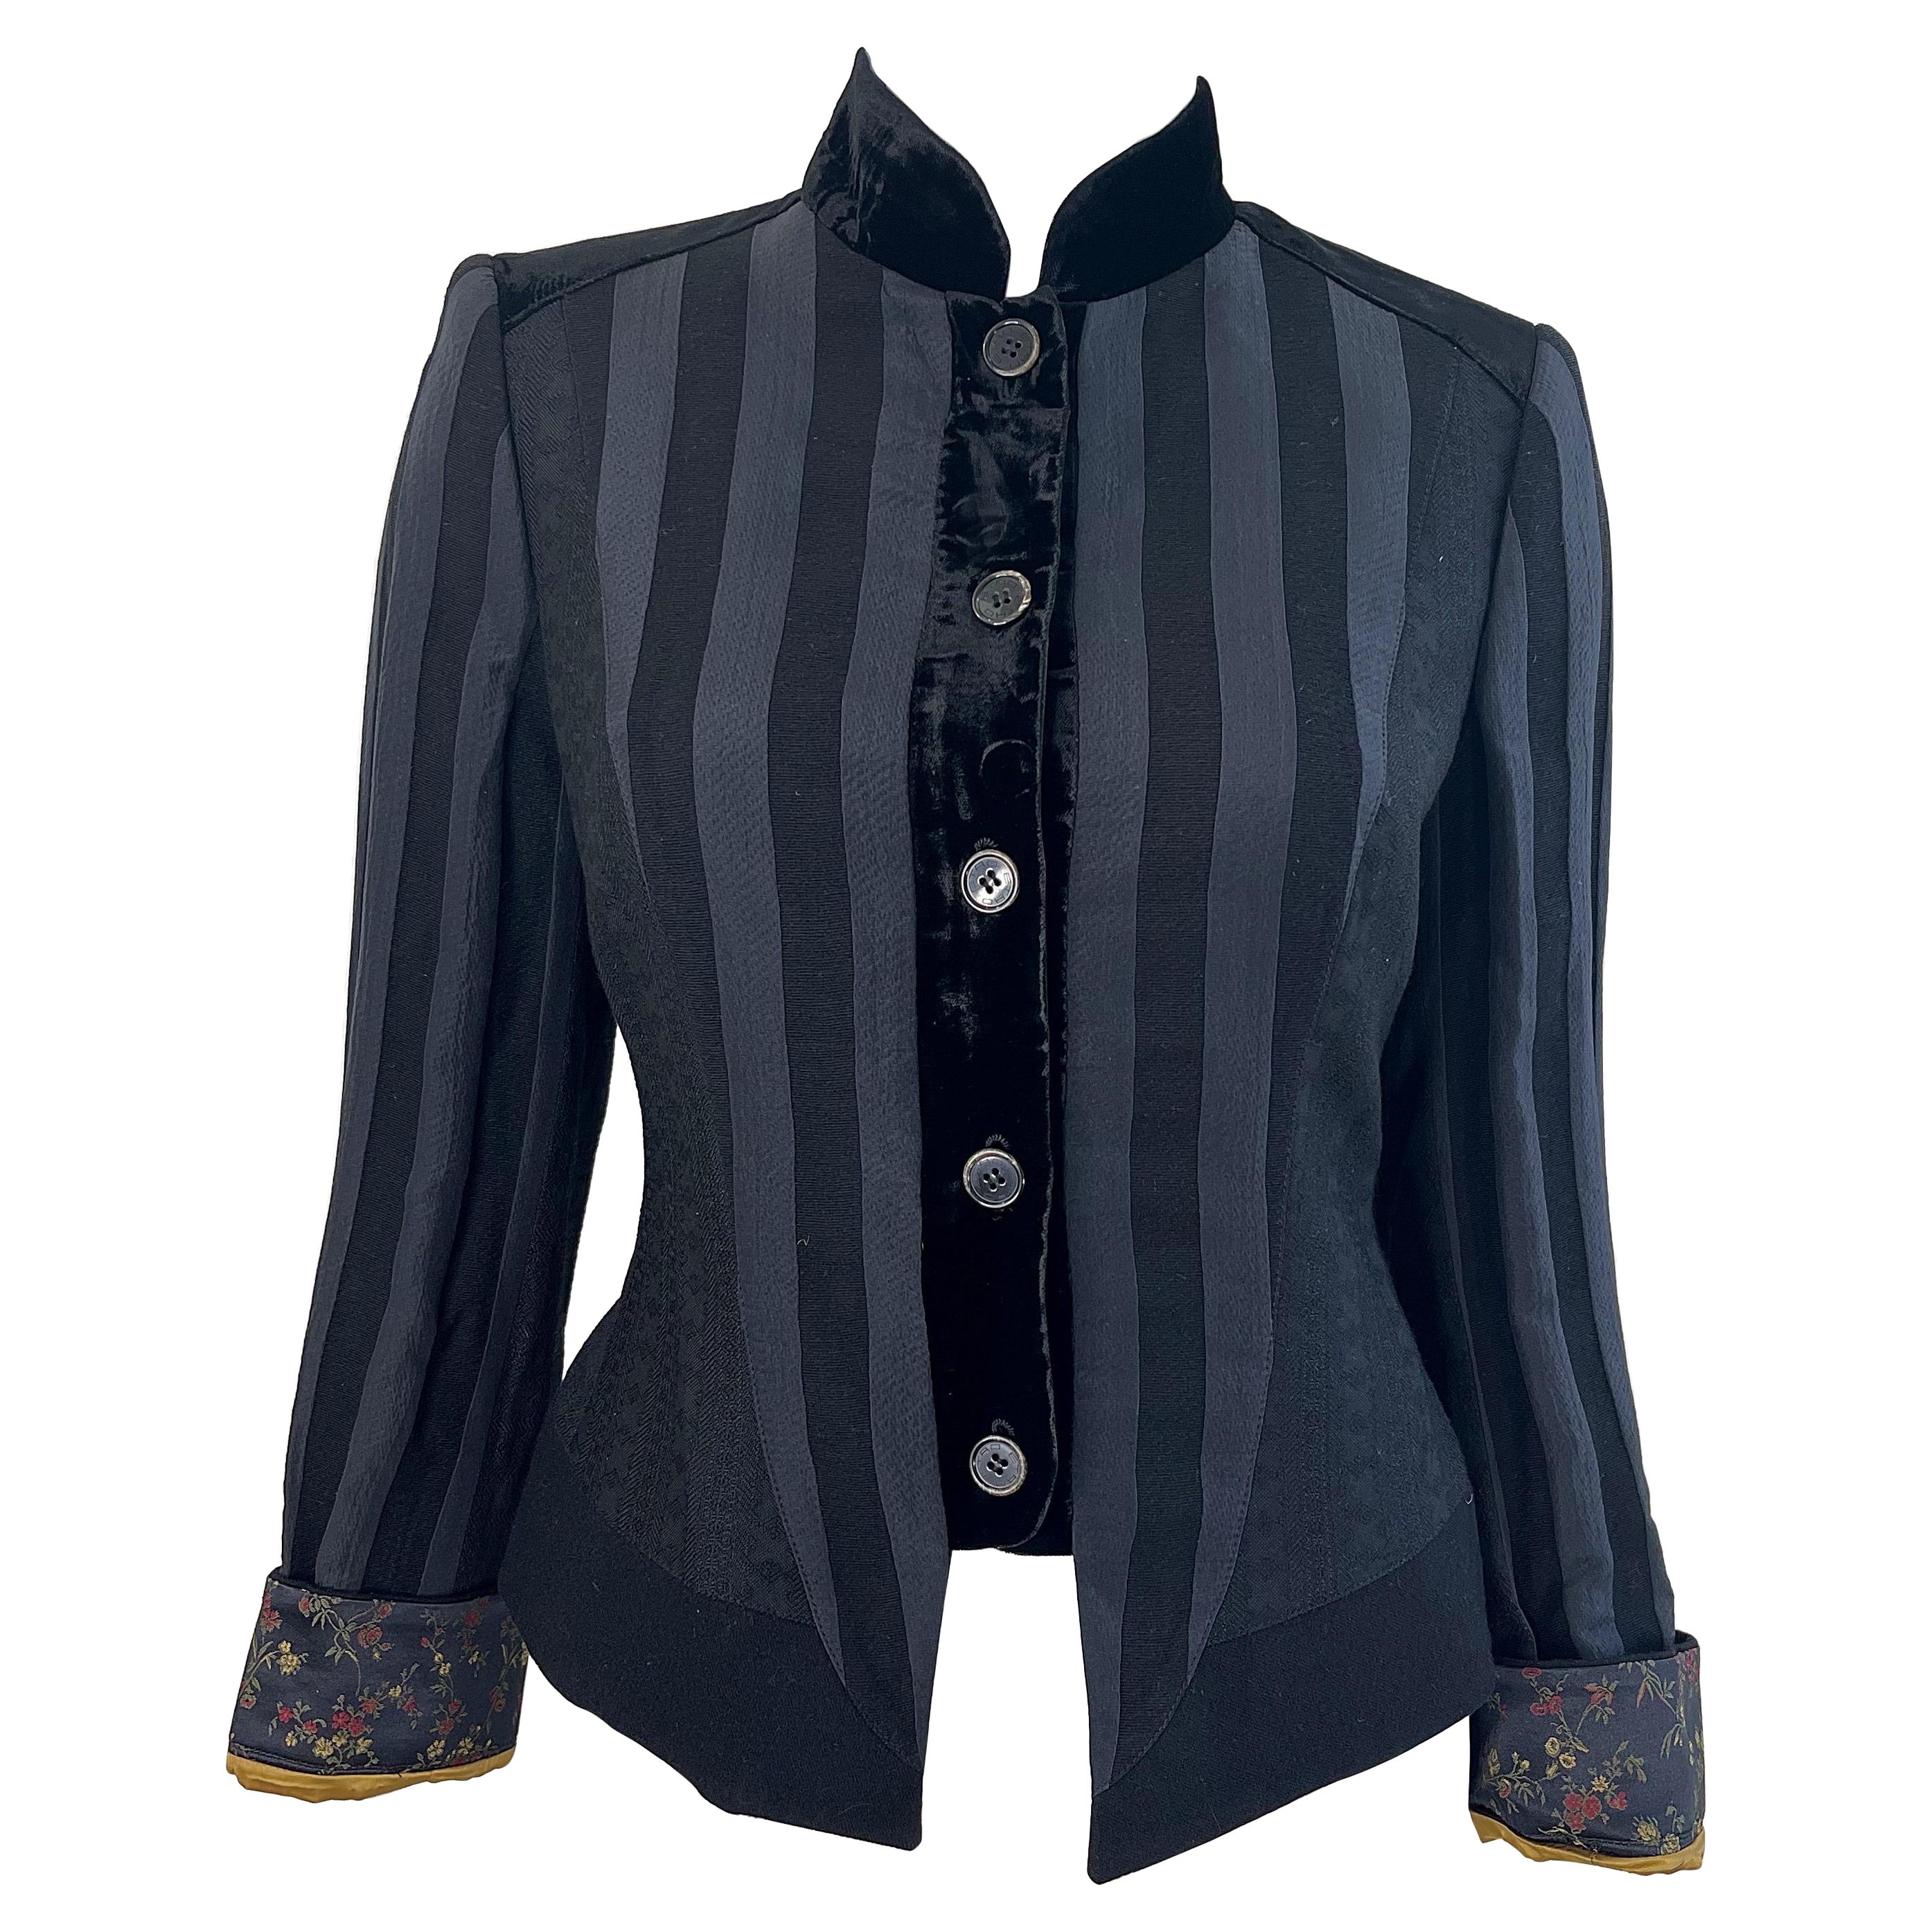 Etro Black Silk Blend Size 44 / US 8 Military Inspired Jacket w/ Flower Cuffs For Sale